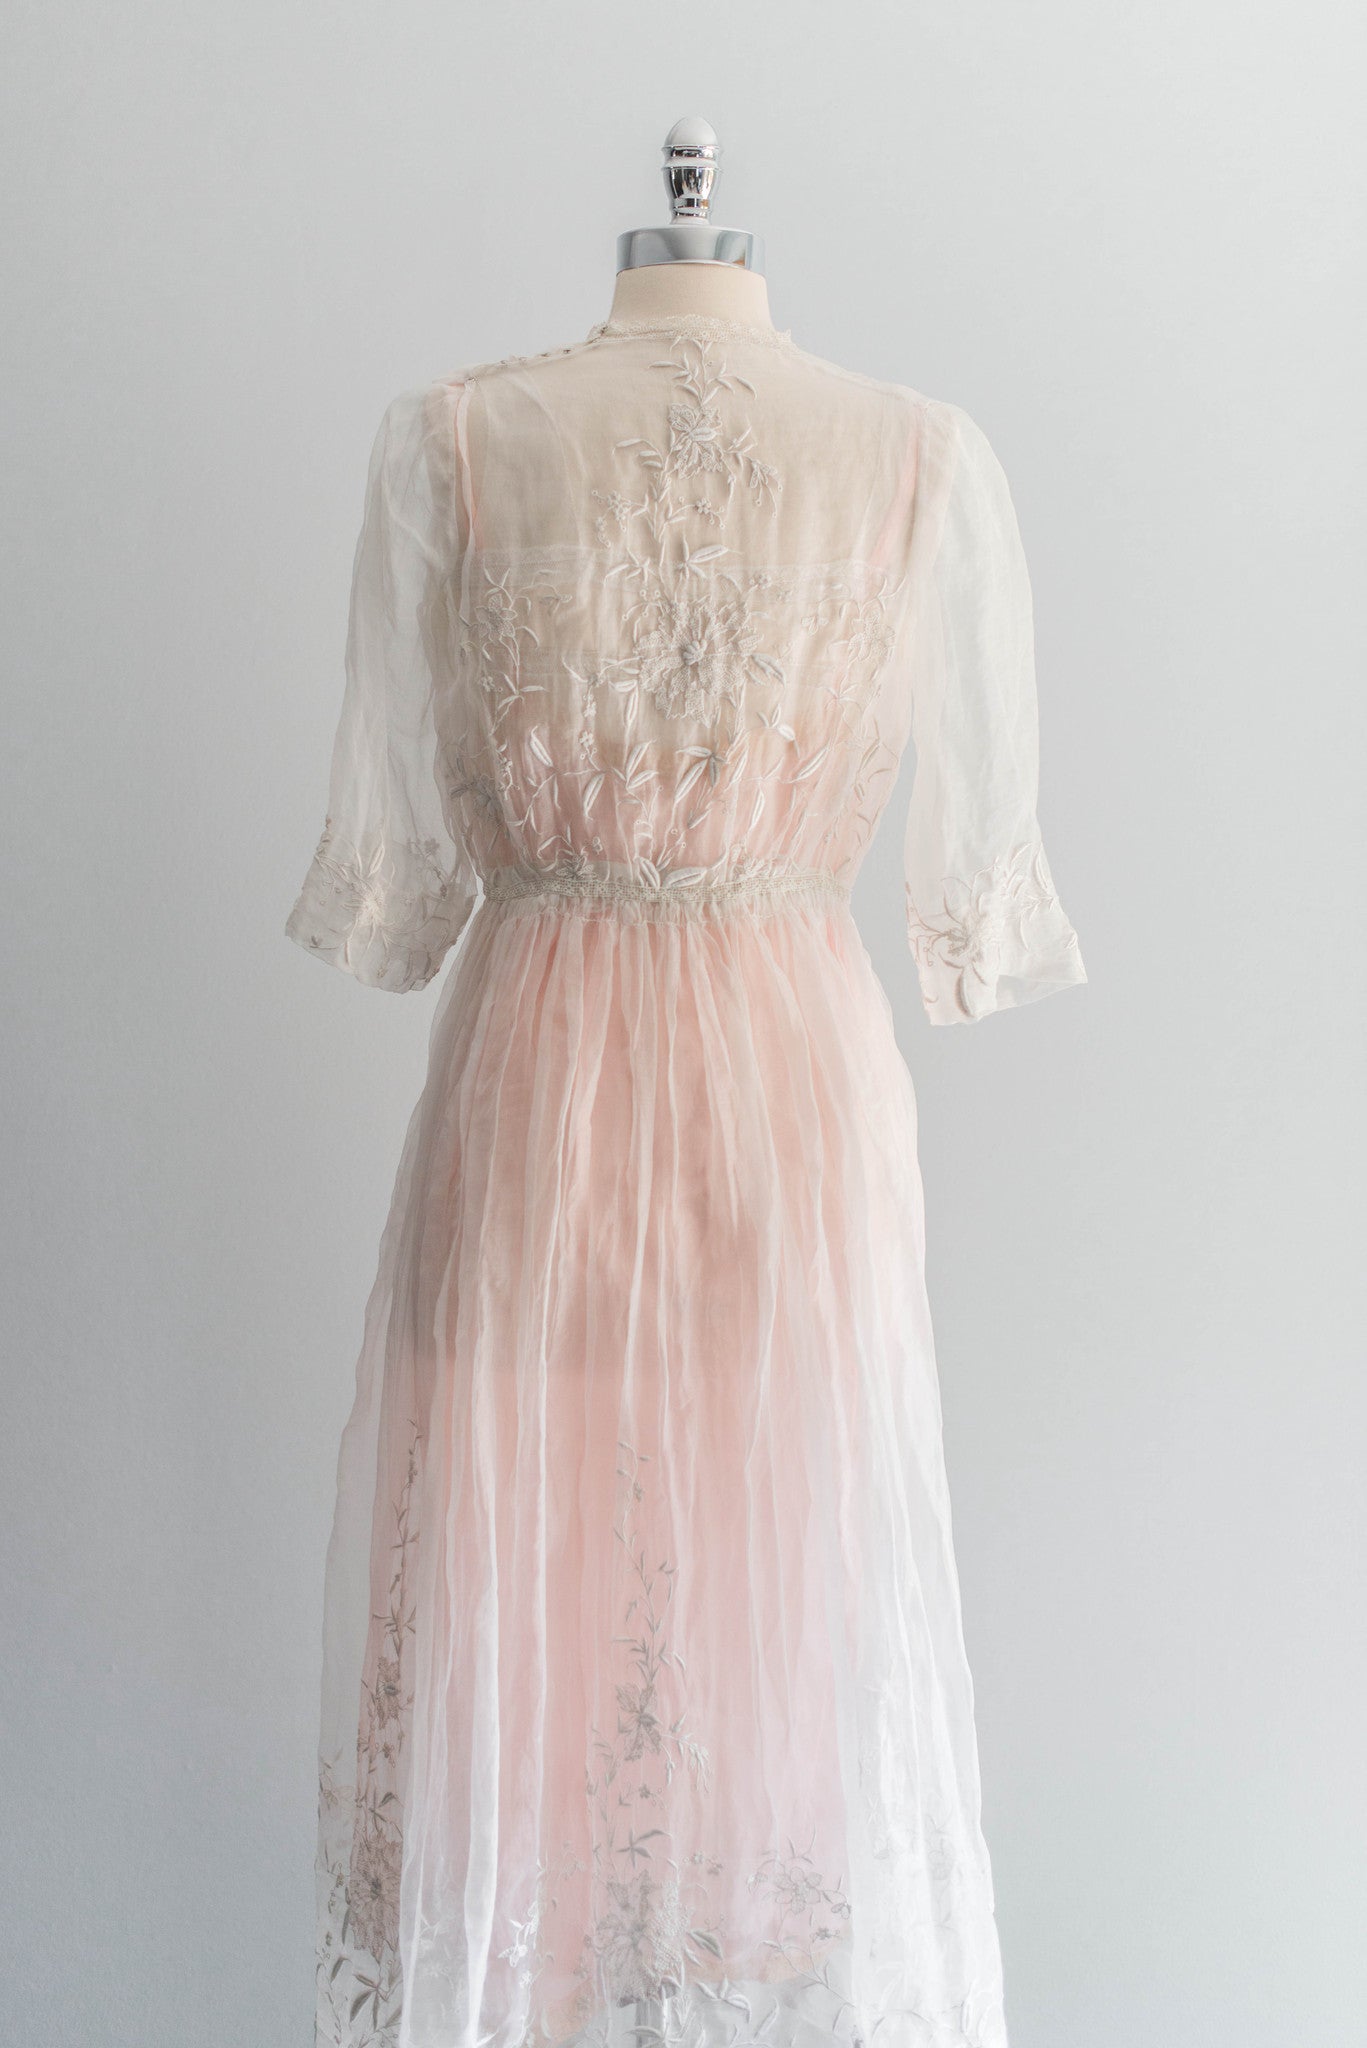 [SOLD] Silk Organza Embroidered Tea Dress | G O S S A M E R